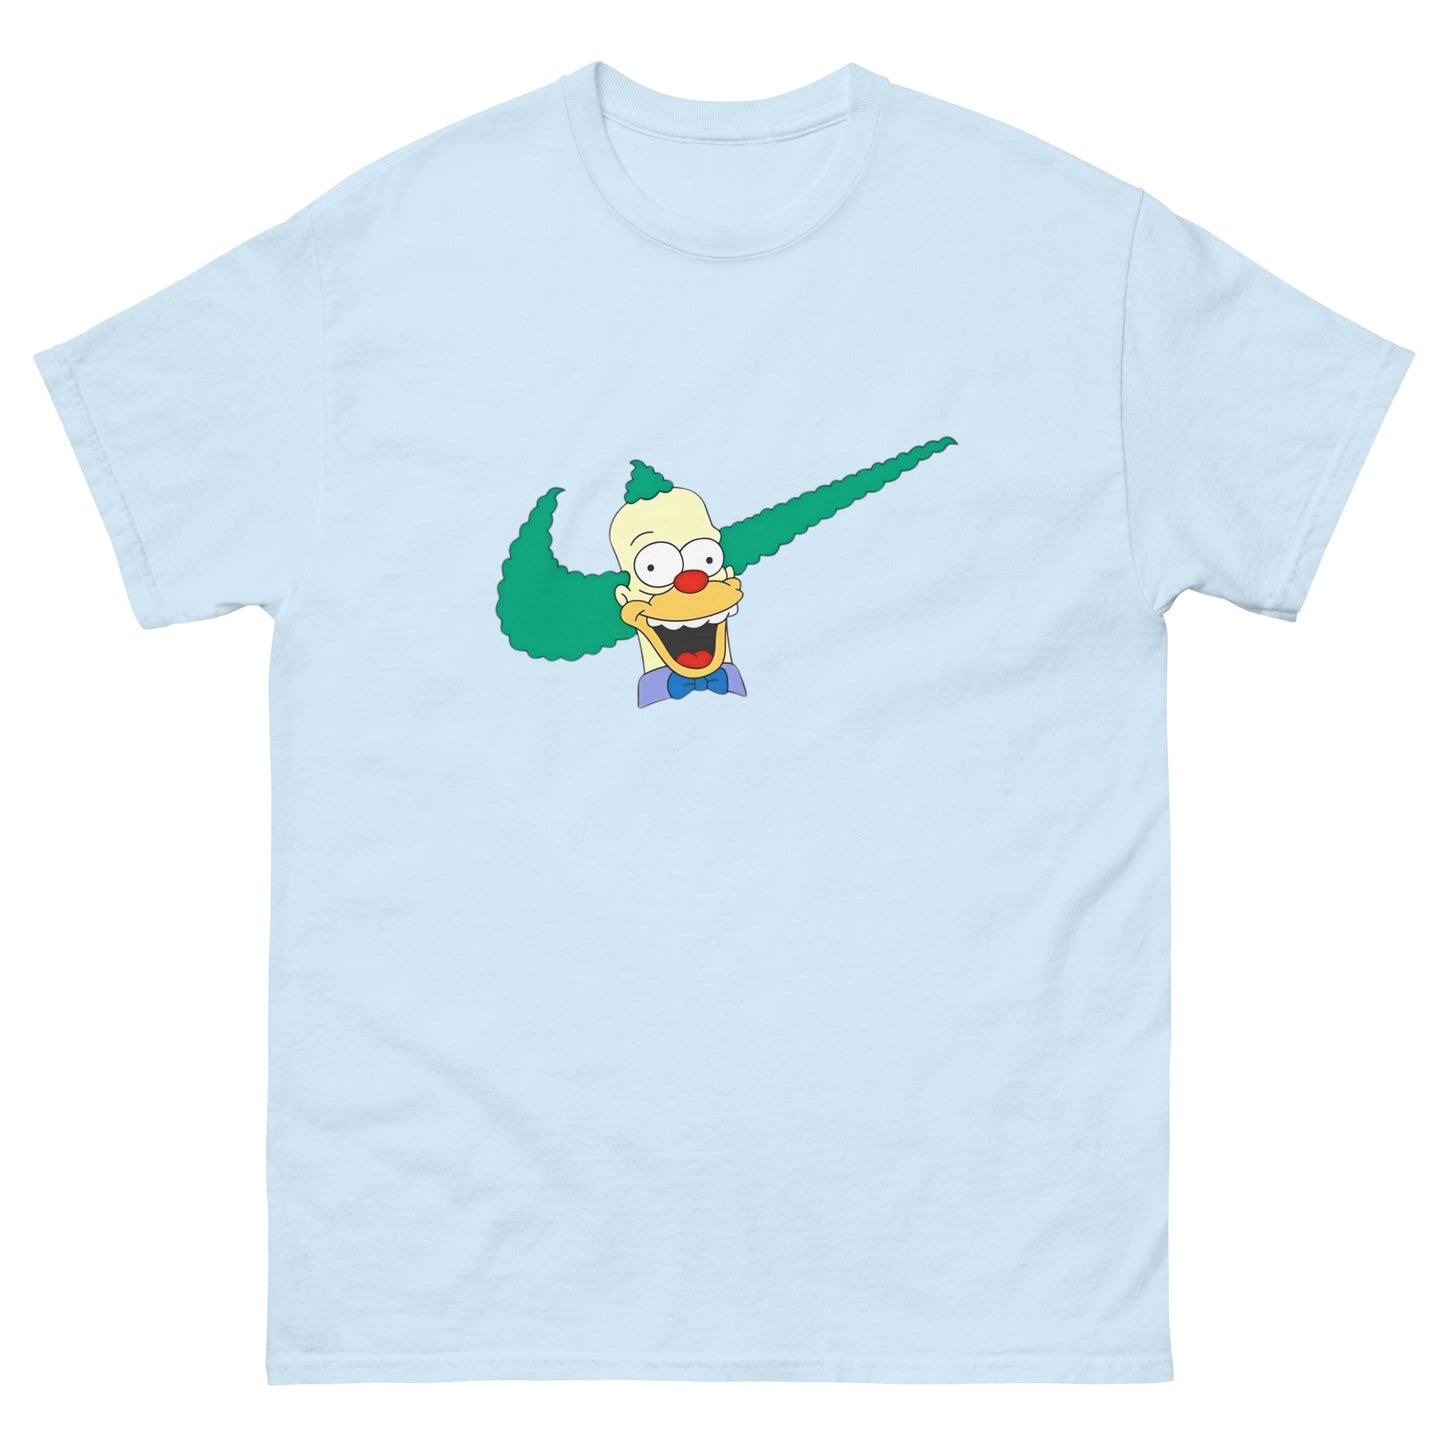 Krusty the Clown T-Shirt